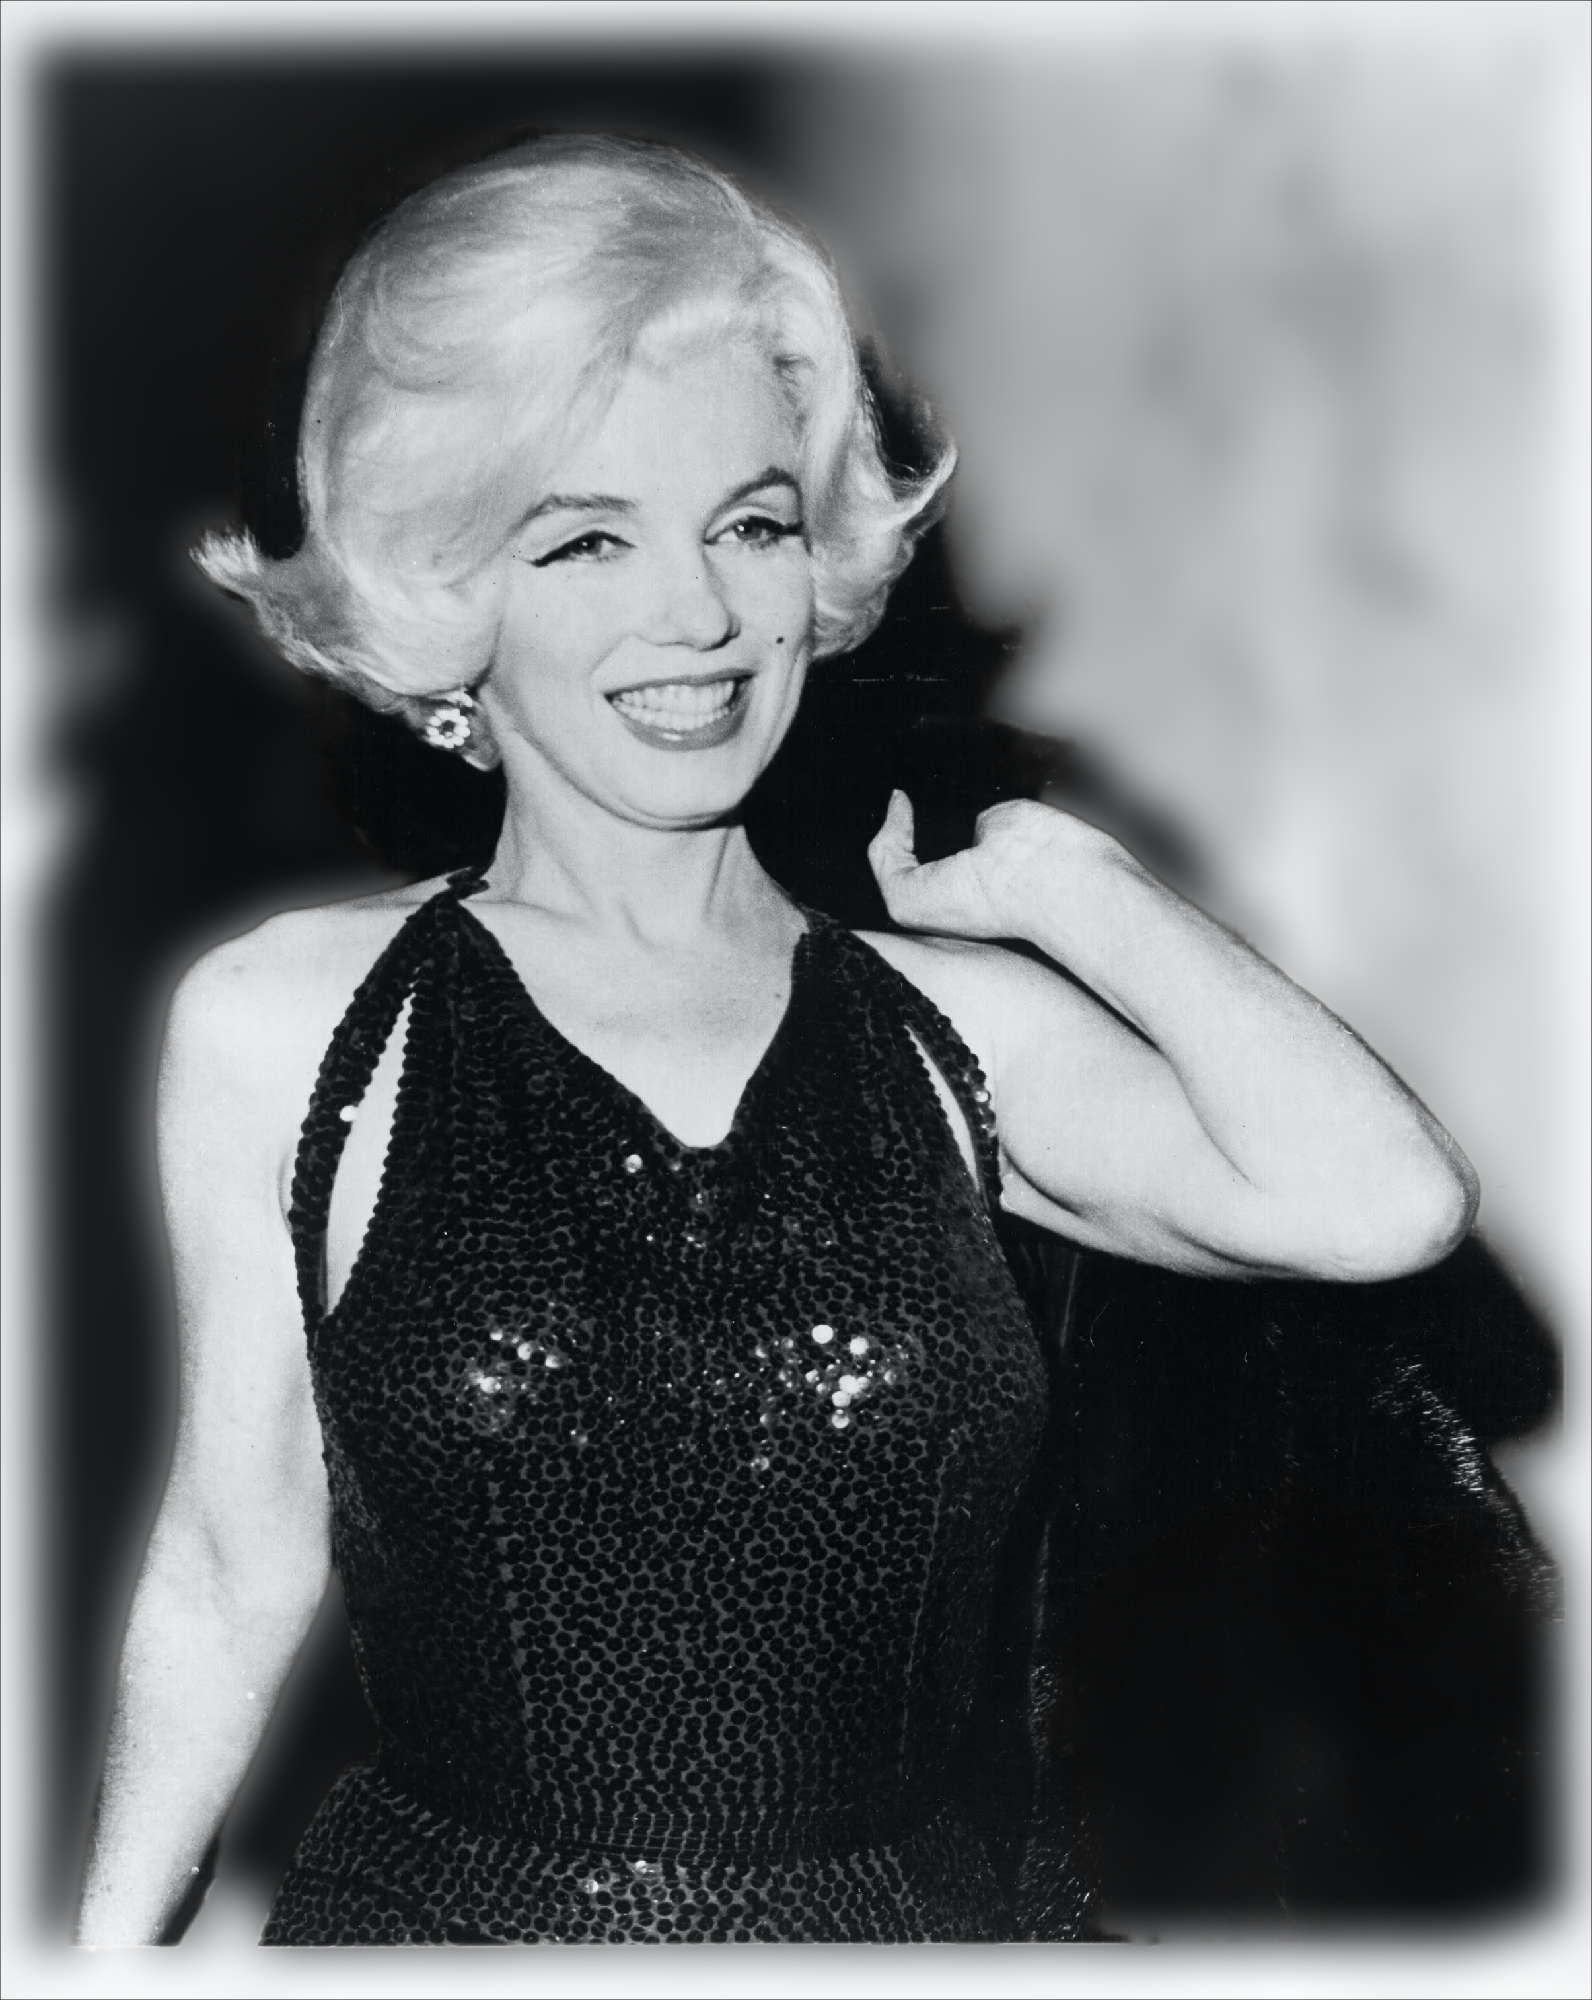 And the Winner Is … Marilyn Monroe!